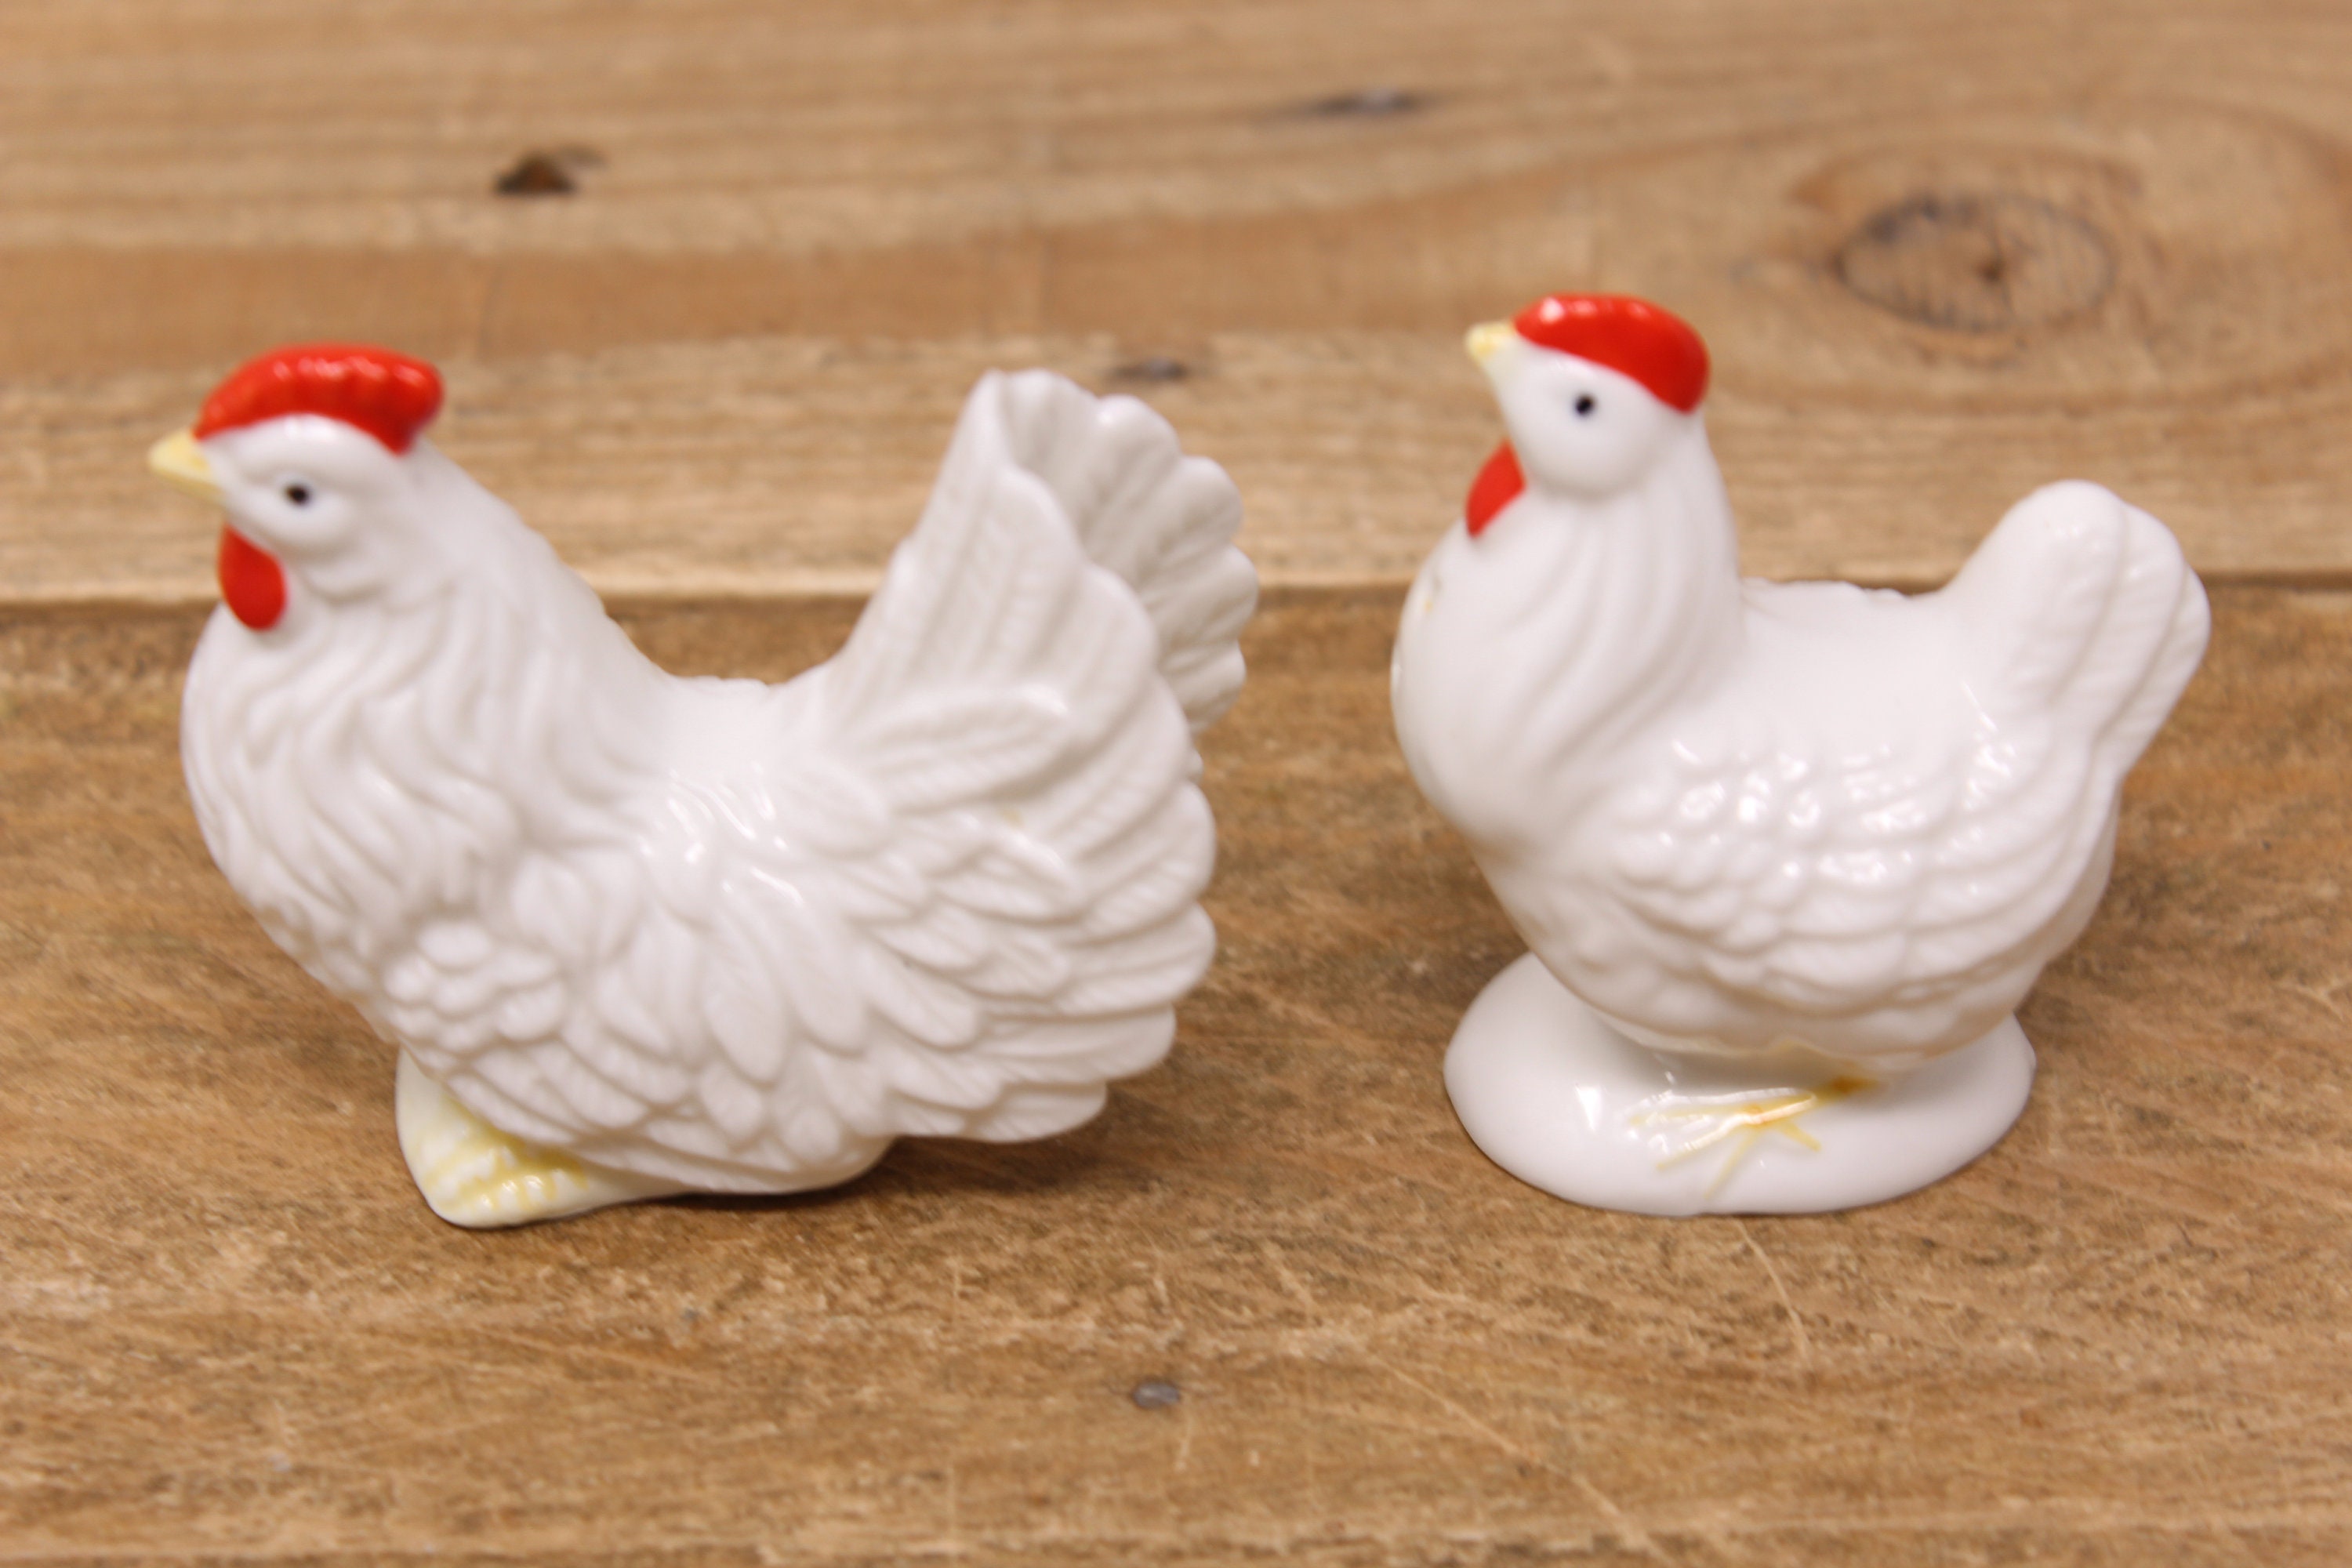 Vintage White Chicken and Rooster Salt & Pepper Shaker Set - Etsy